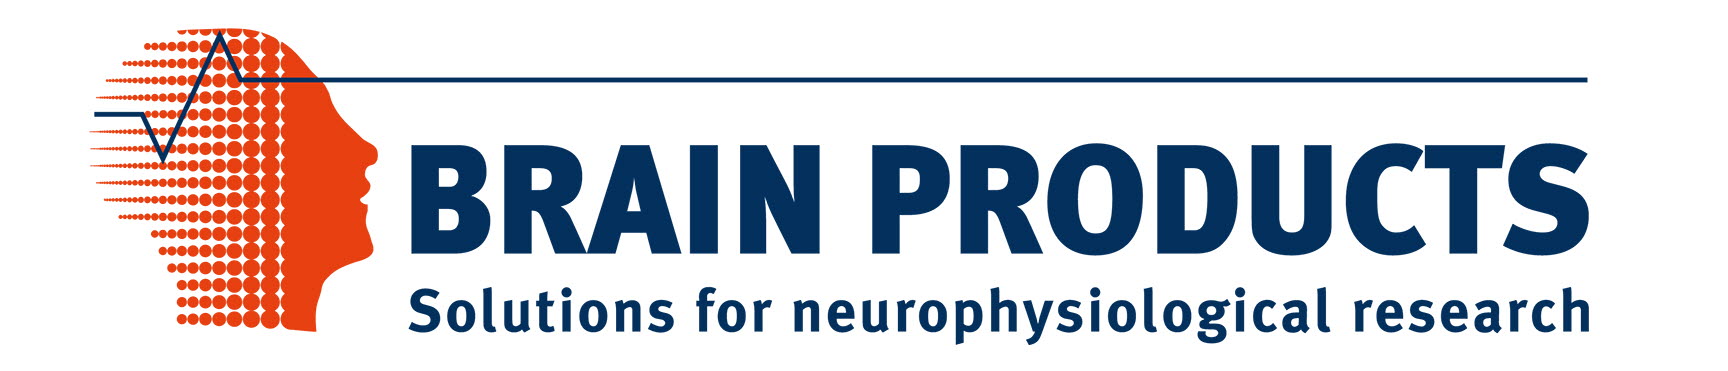 Brain products logo